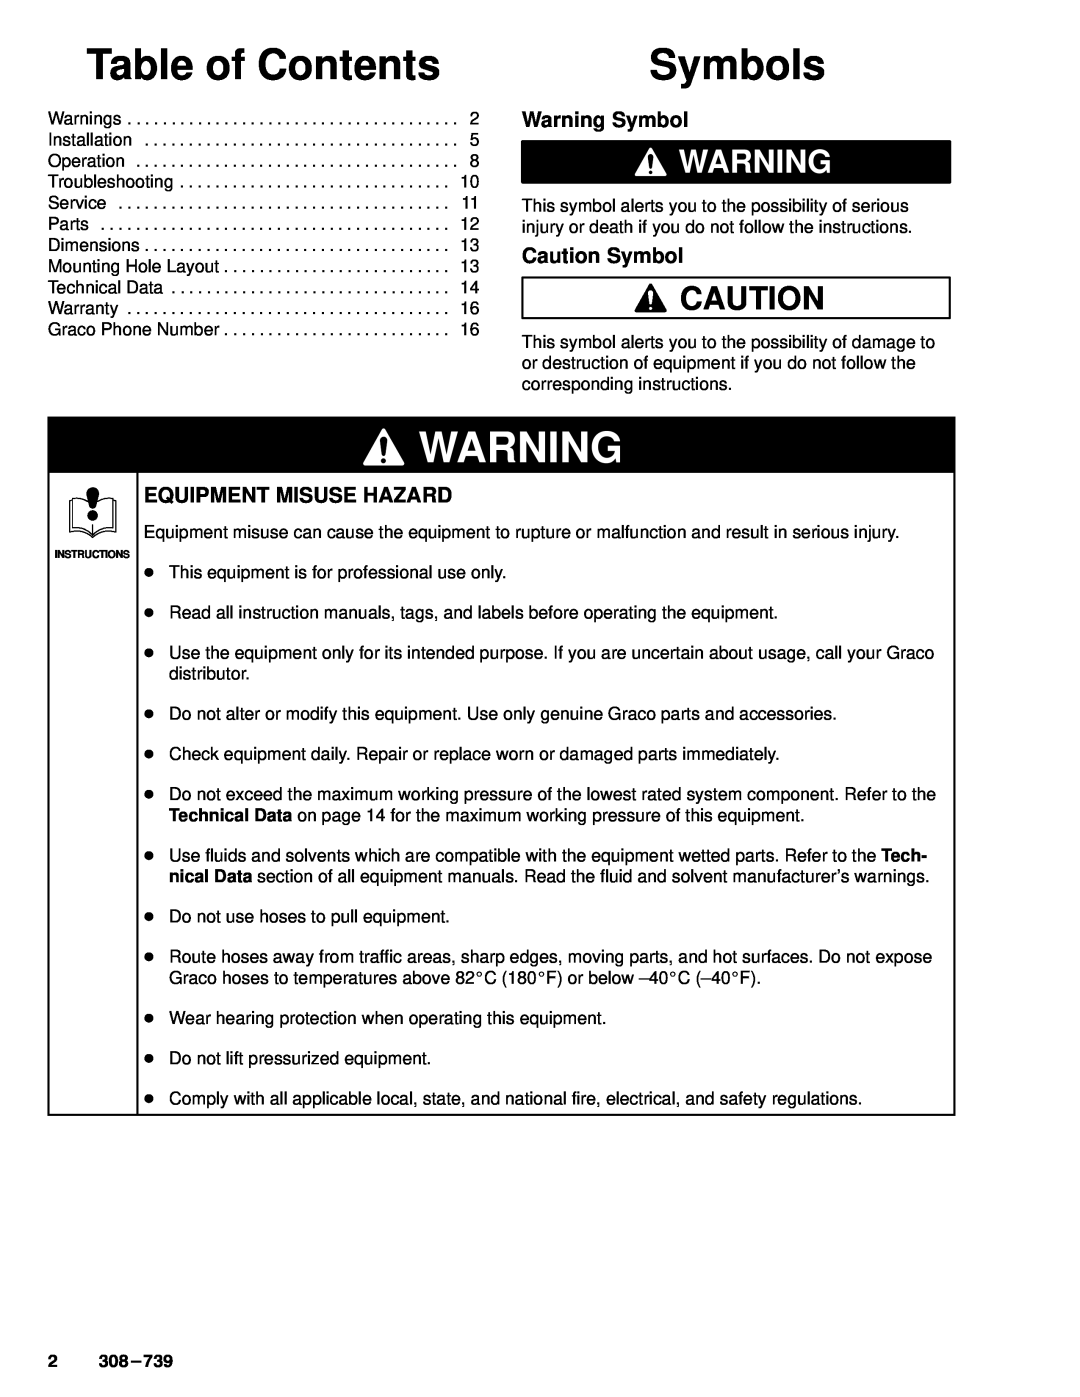 Graco Series A, 239-327 manual Table of Contents, Symbols, Warning Symbol, Caution Symbol, Equipment Misuse Hazard 